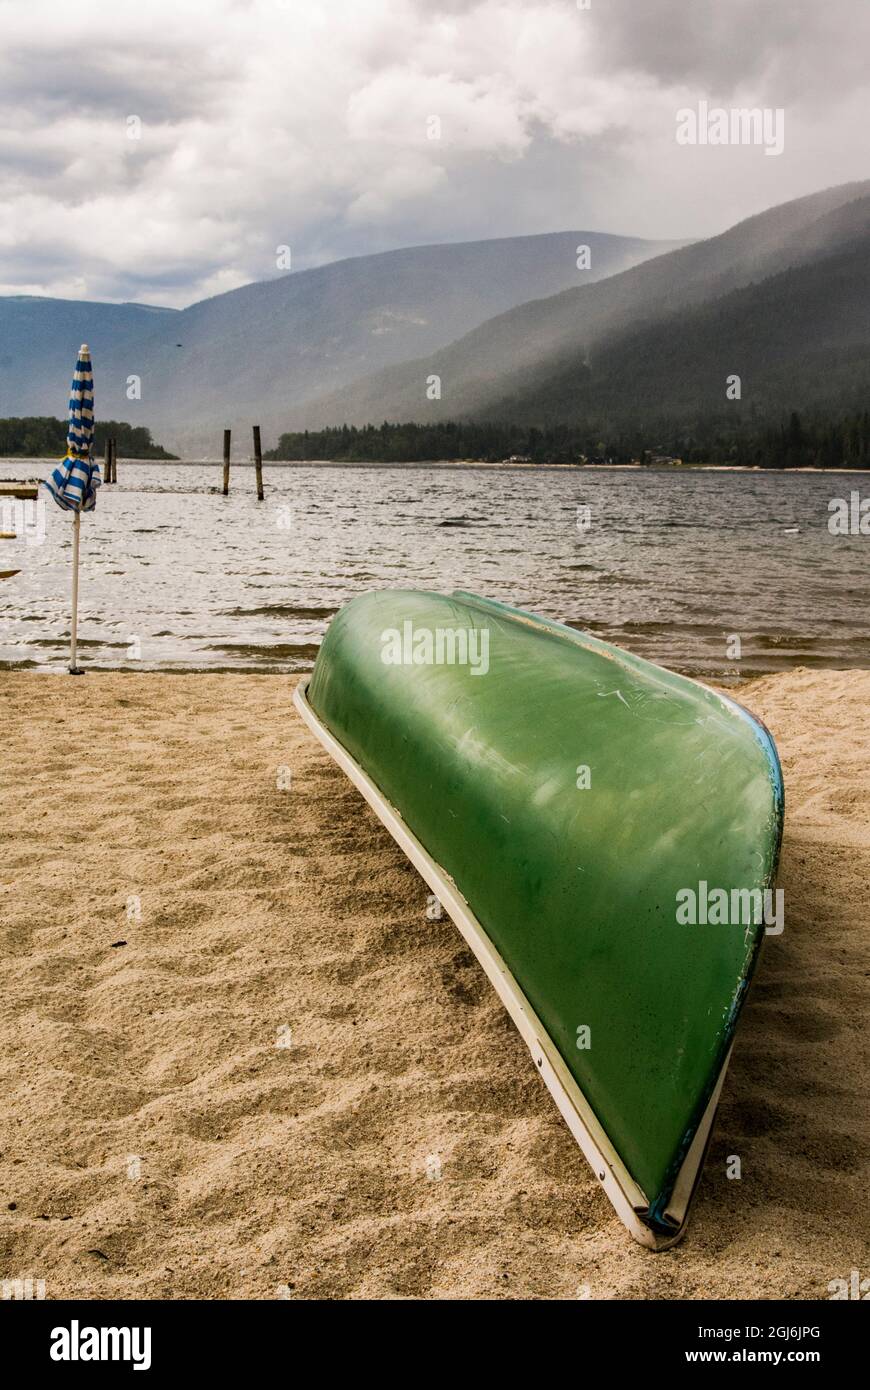 Kanada, British Columbia. Columbia River, Kootenay Rockies, grünes Kanu am Strand. Stockfoto